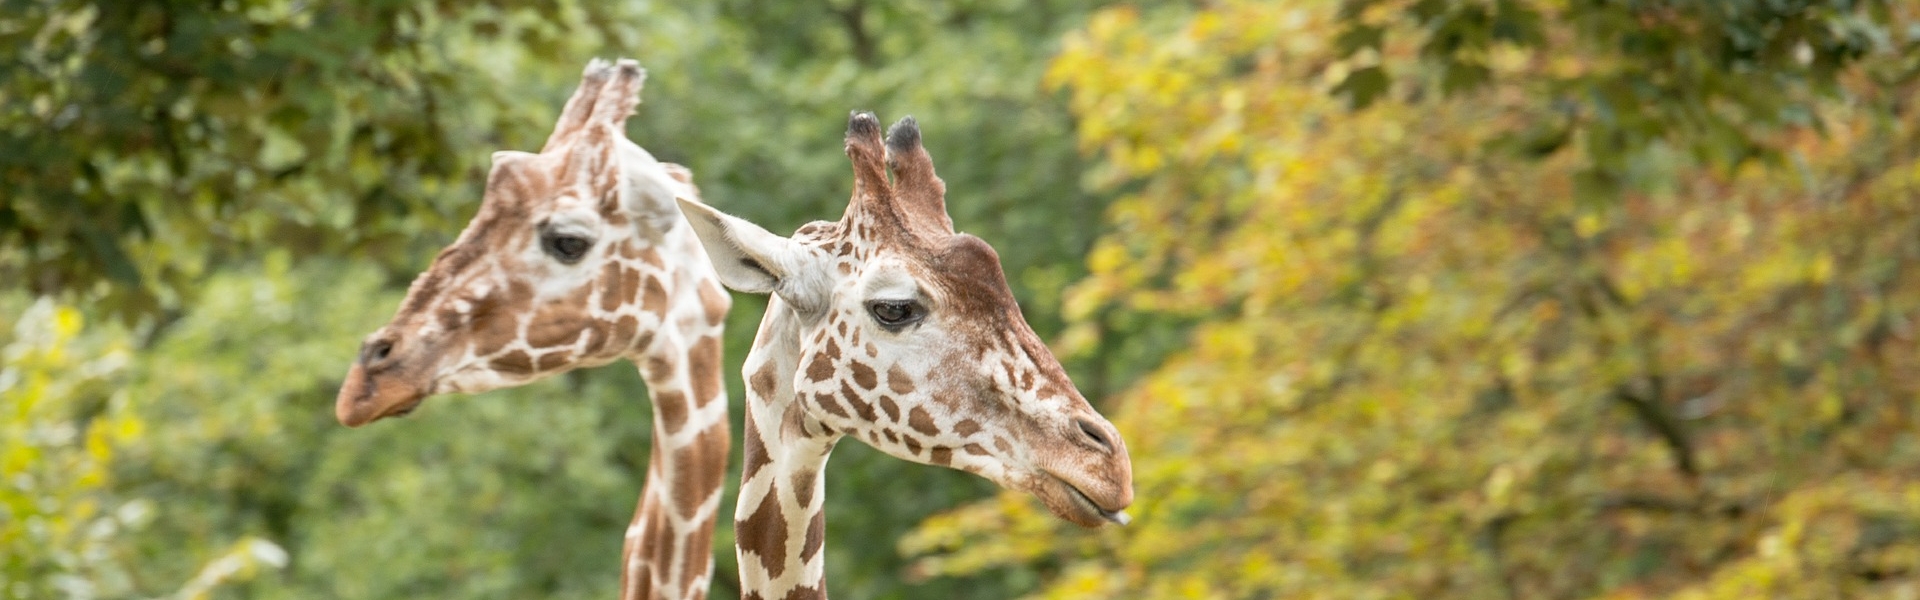 Twee spelende giraffen Pixabay Michael Schwarzenberger